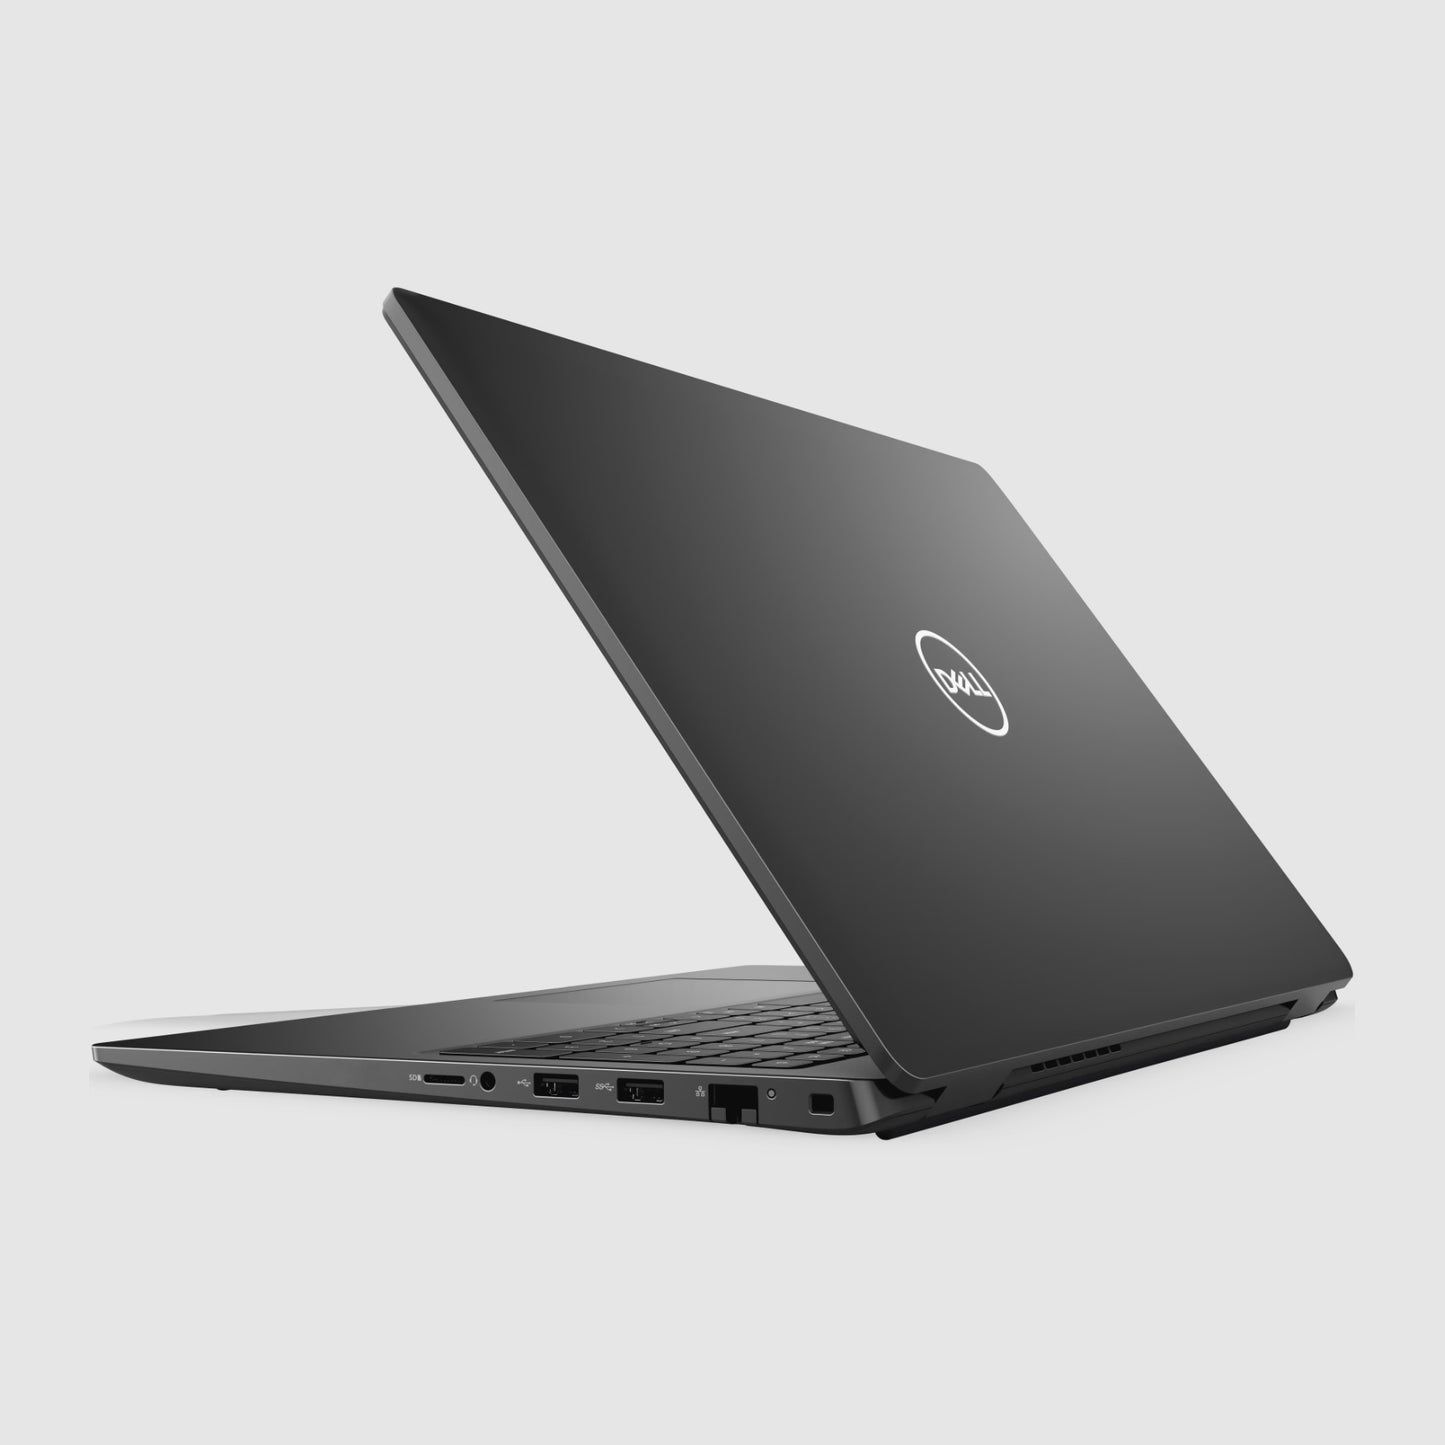 Dell Latitude 3520 i7-1165G7 VGA Iris Xe 15.6" Laptop Offers (New Open Box)